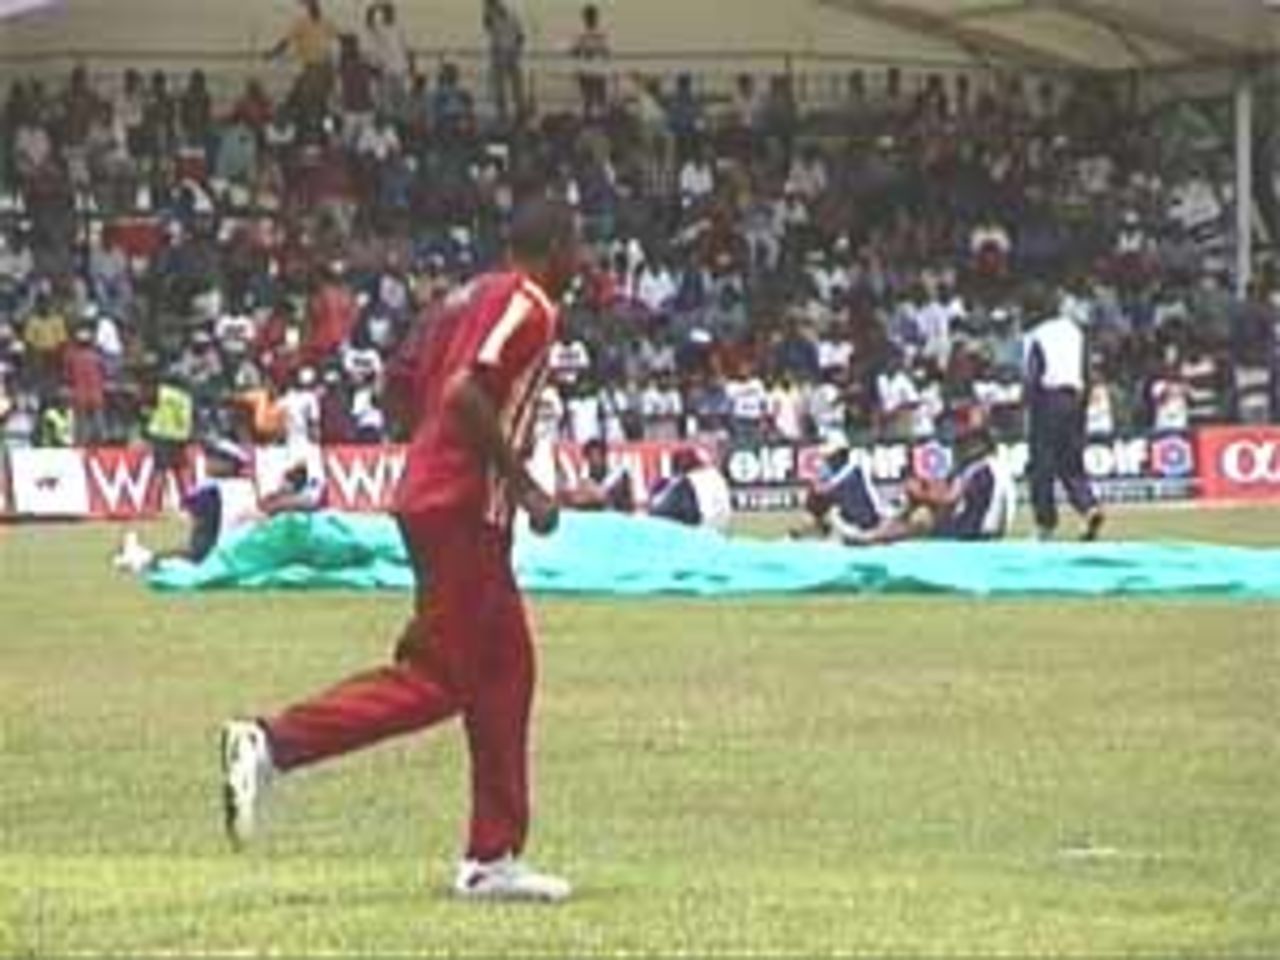 Walsh takes a jog, India v West Indies (3rd ODI), Coca-Cola Singapore Challenge, 1999-2000, Kallang Ground, Singapore, 5 Sep 1999.